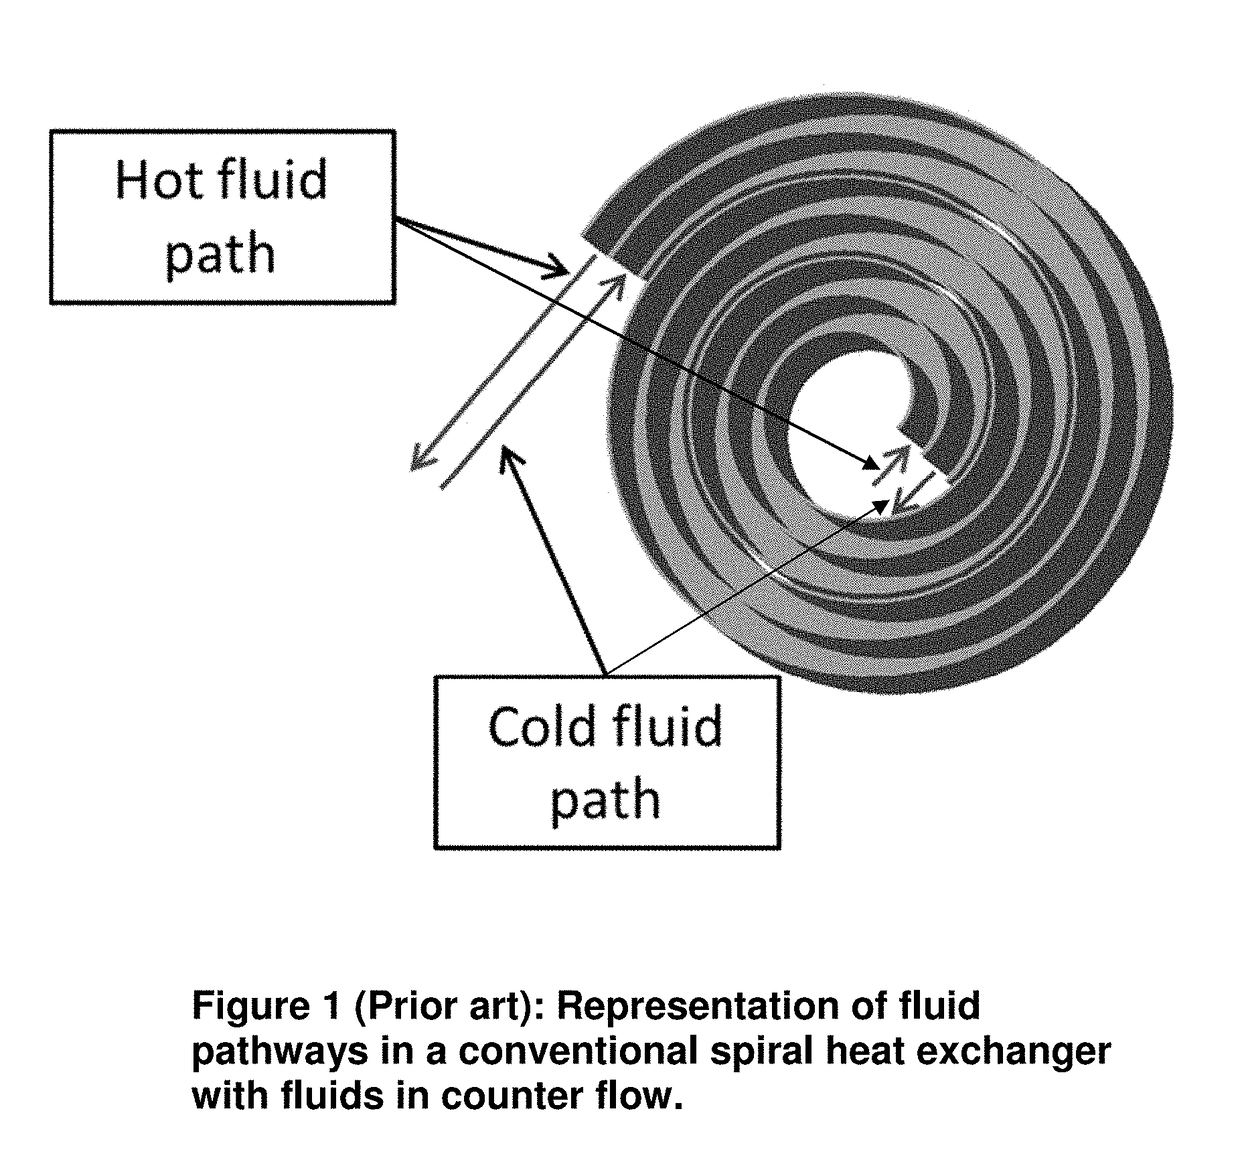 3D spiral heat exchanger